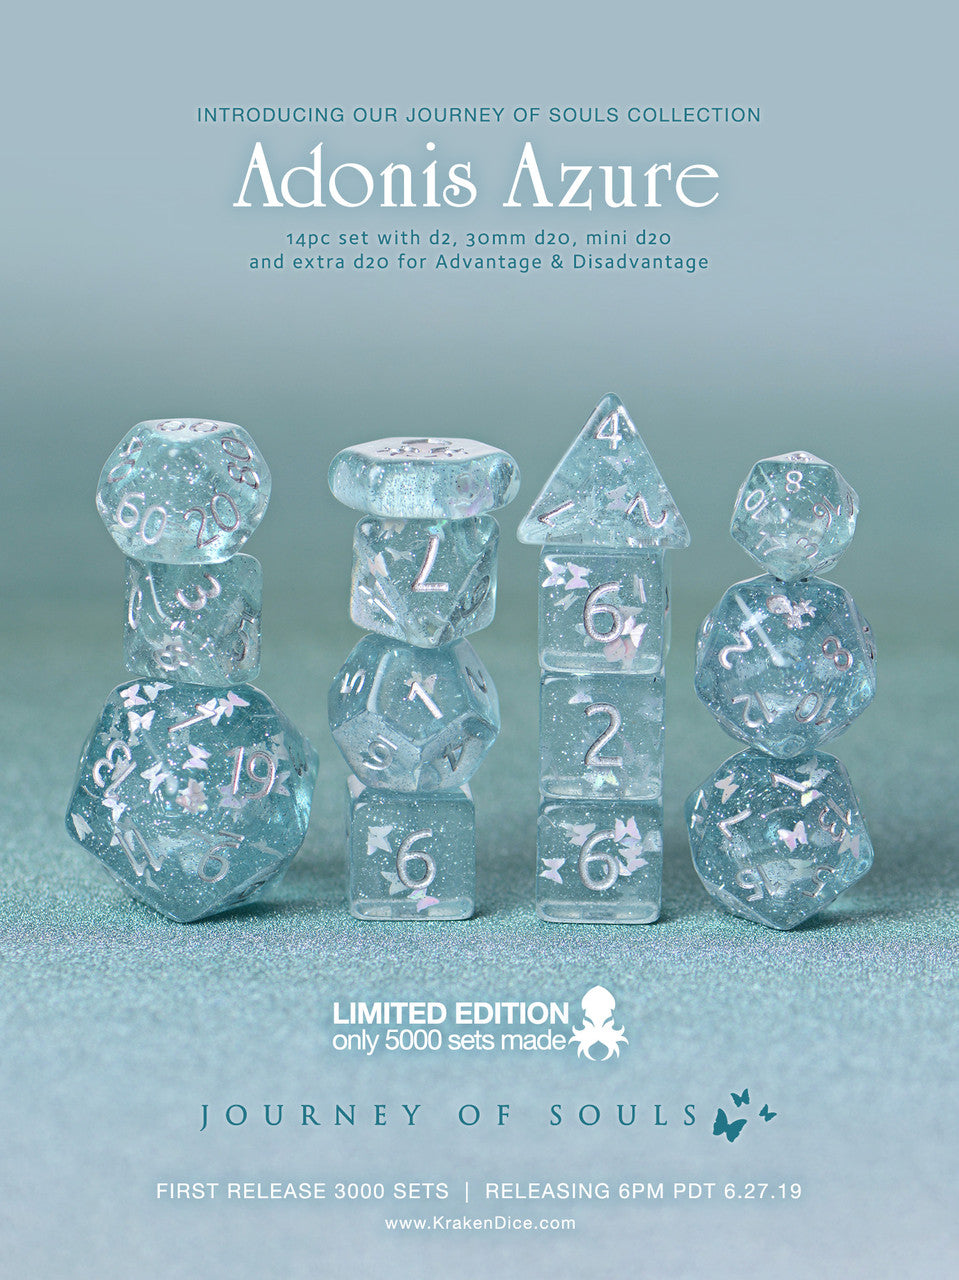 Adonis Azure 14pc Limited Edition Dice Set